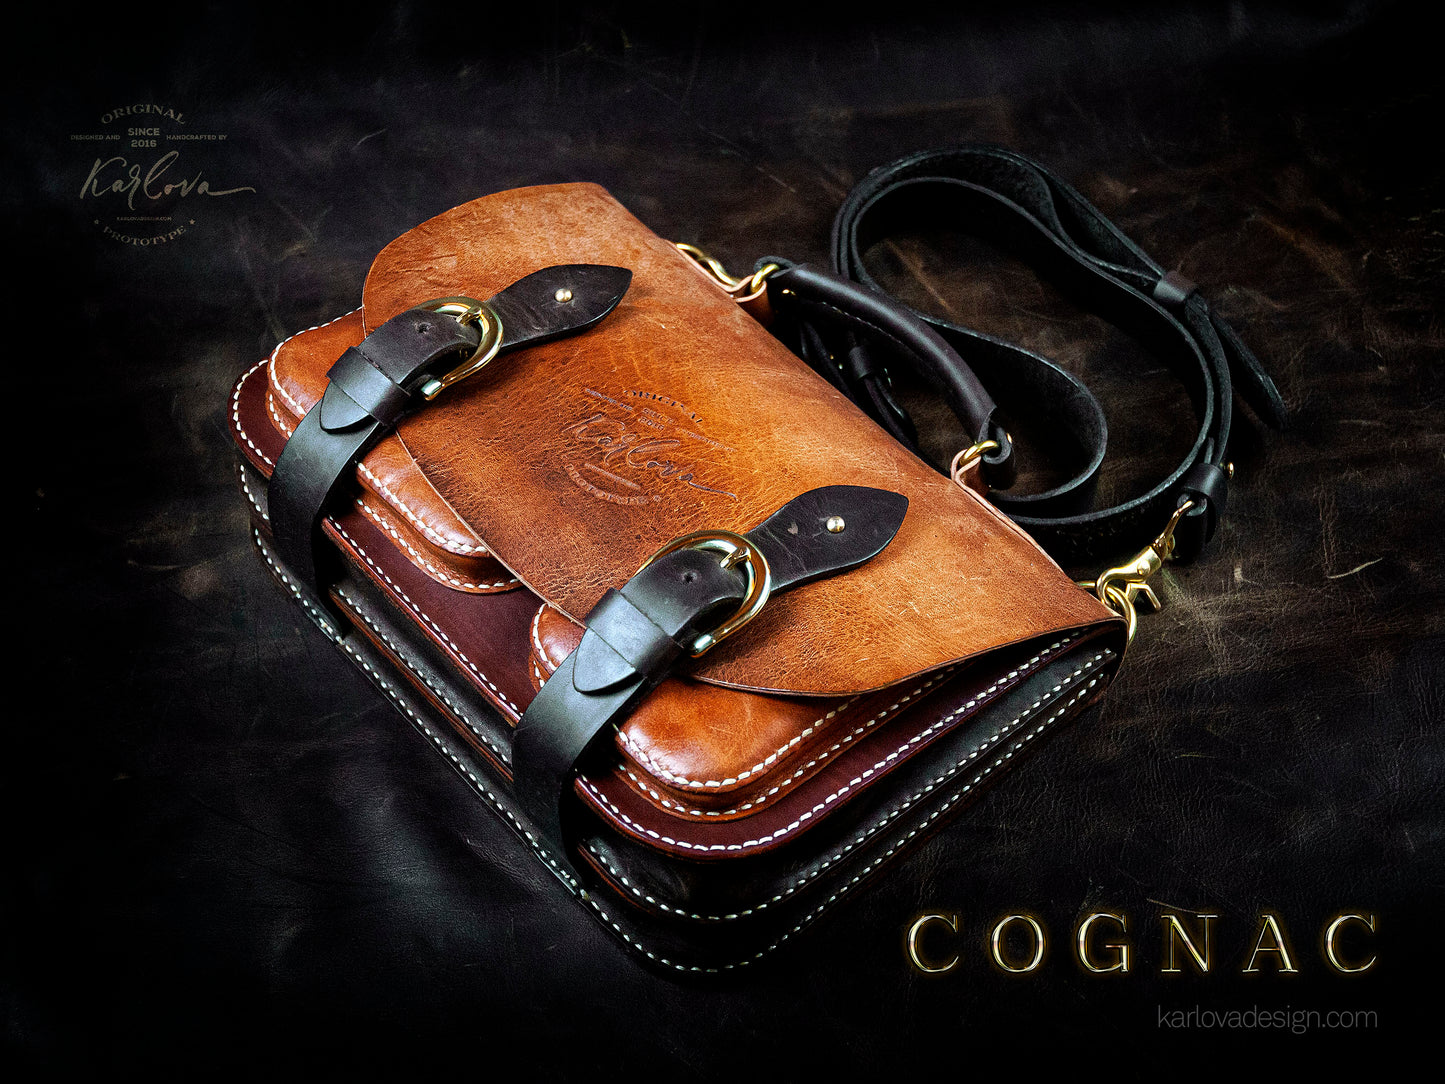 Cognac Series - All 3 Bags